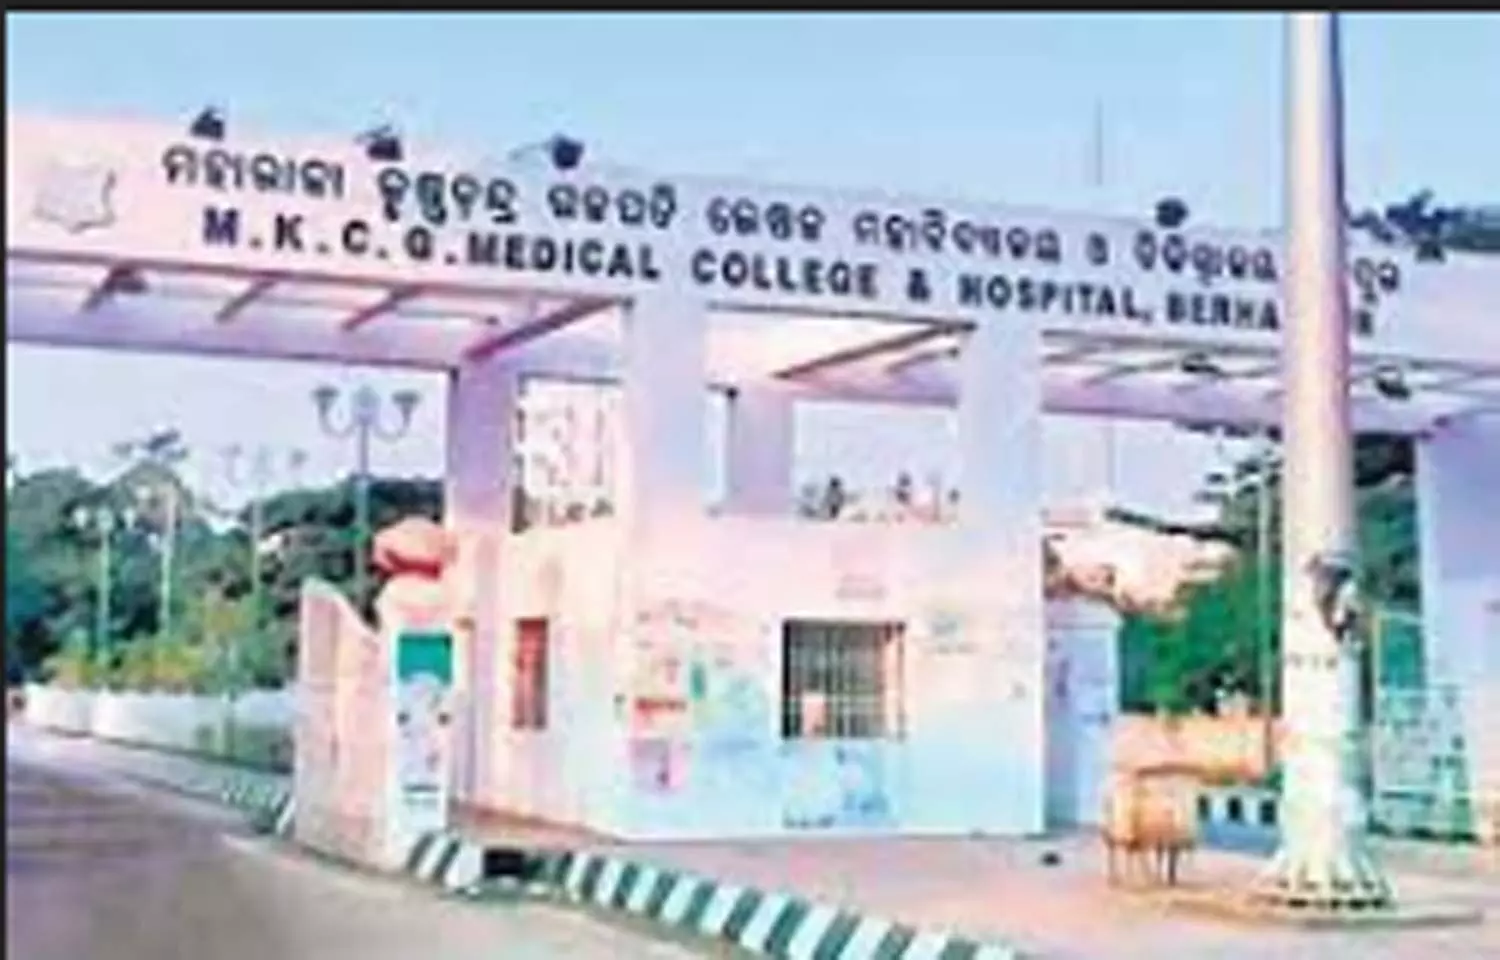 Odisha: Fire erupts at MKCG Medical College and Hospital